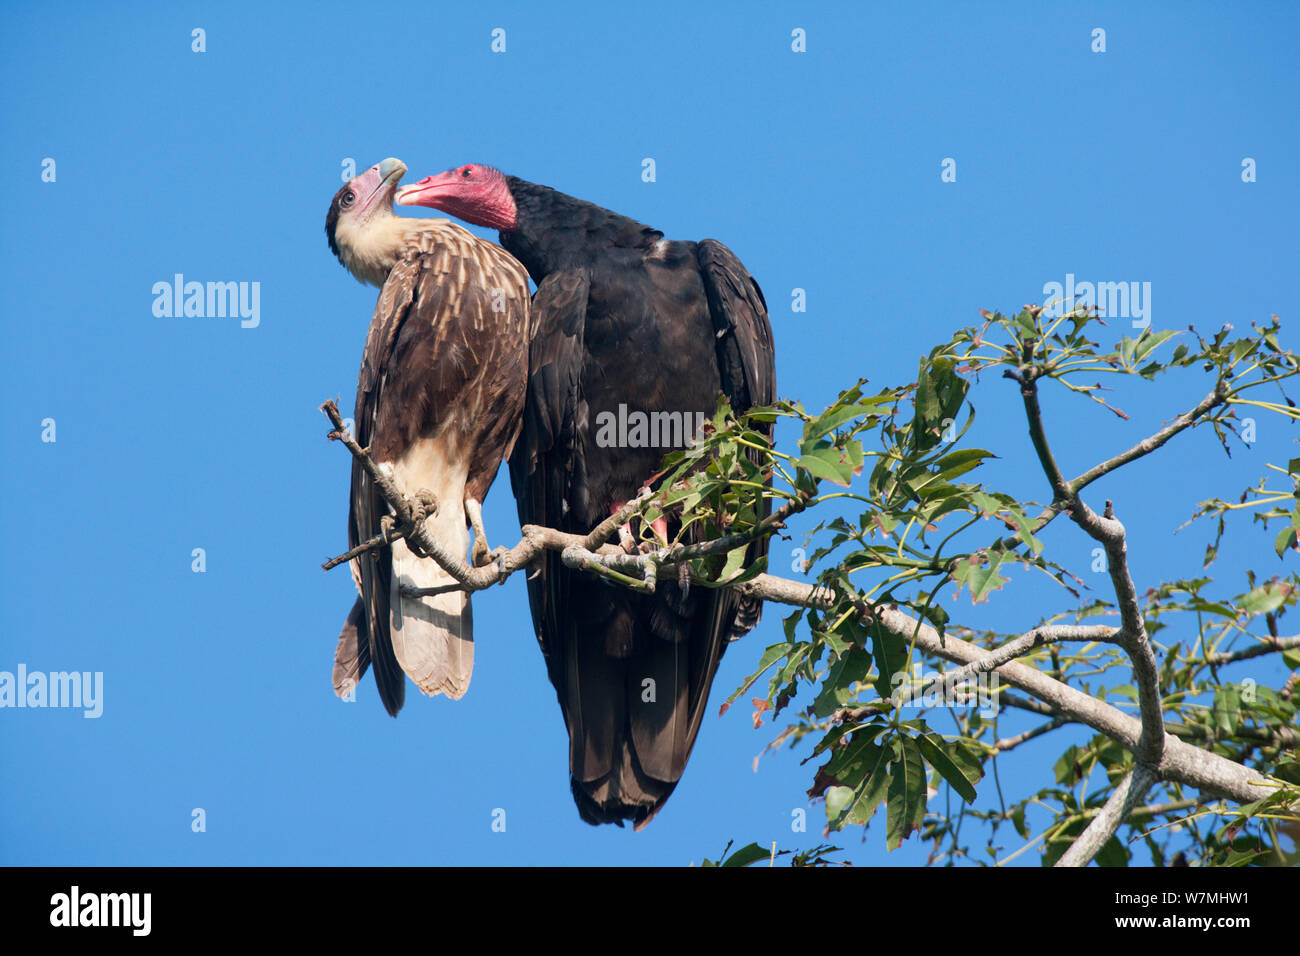 Turkey Vulture (Cathartes aura) interacting with Crested Caracara (Caracara plancus). Maria Madre Island, Islas Marias Biosphere Reserve, Sea of Cortez (Gulf of California), Mexico, September. Stock Photo